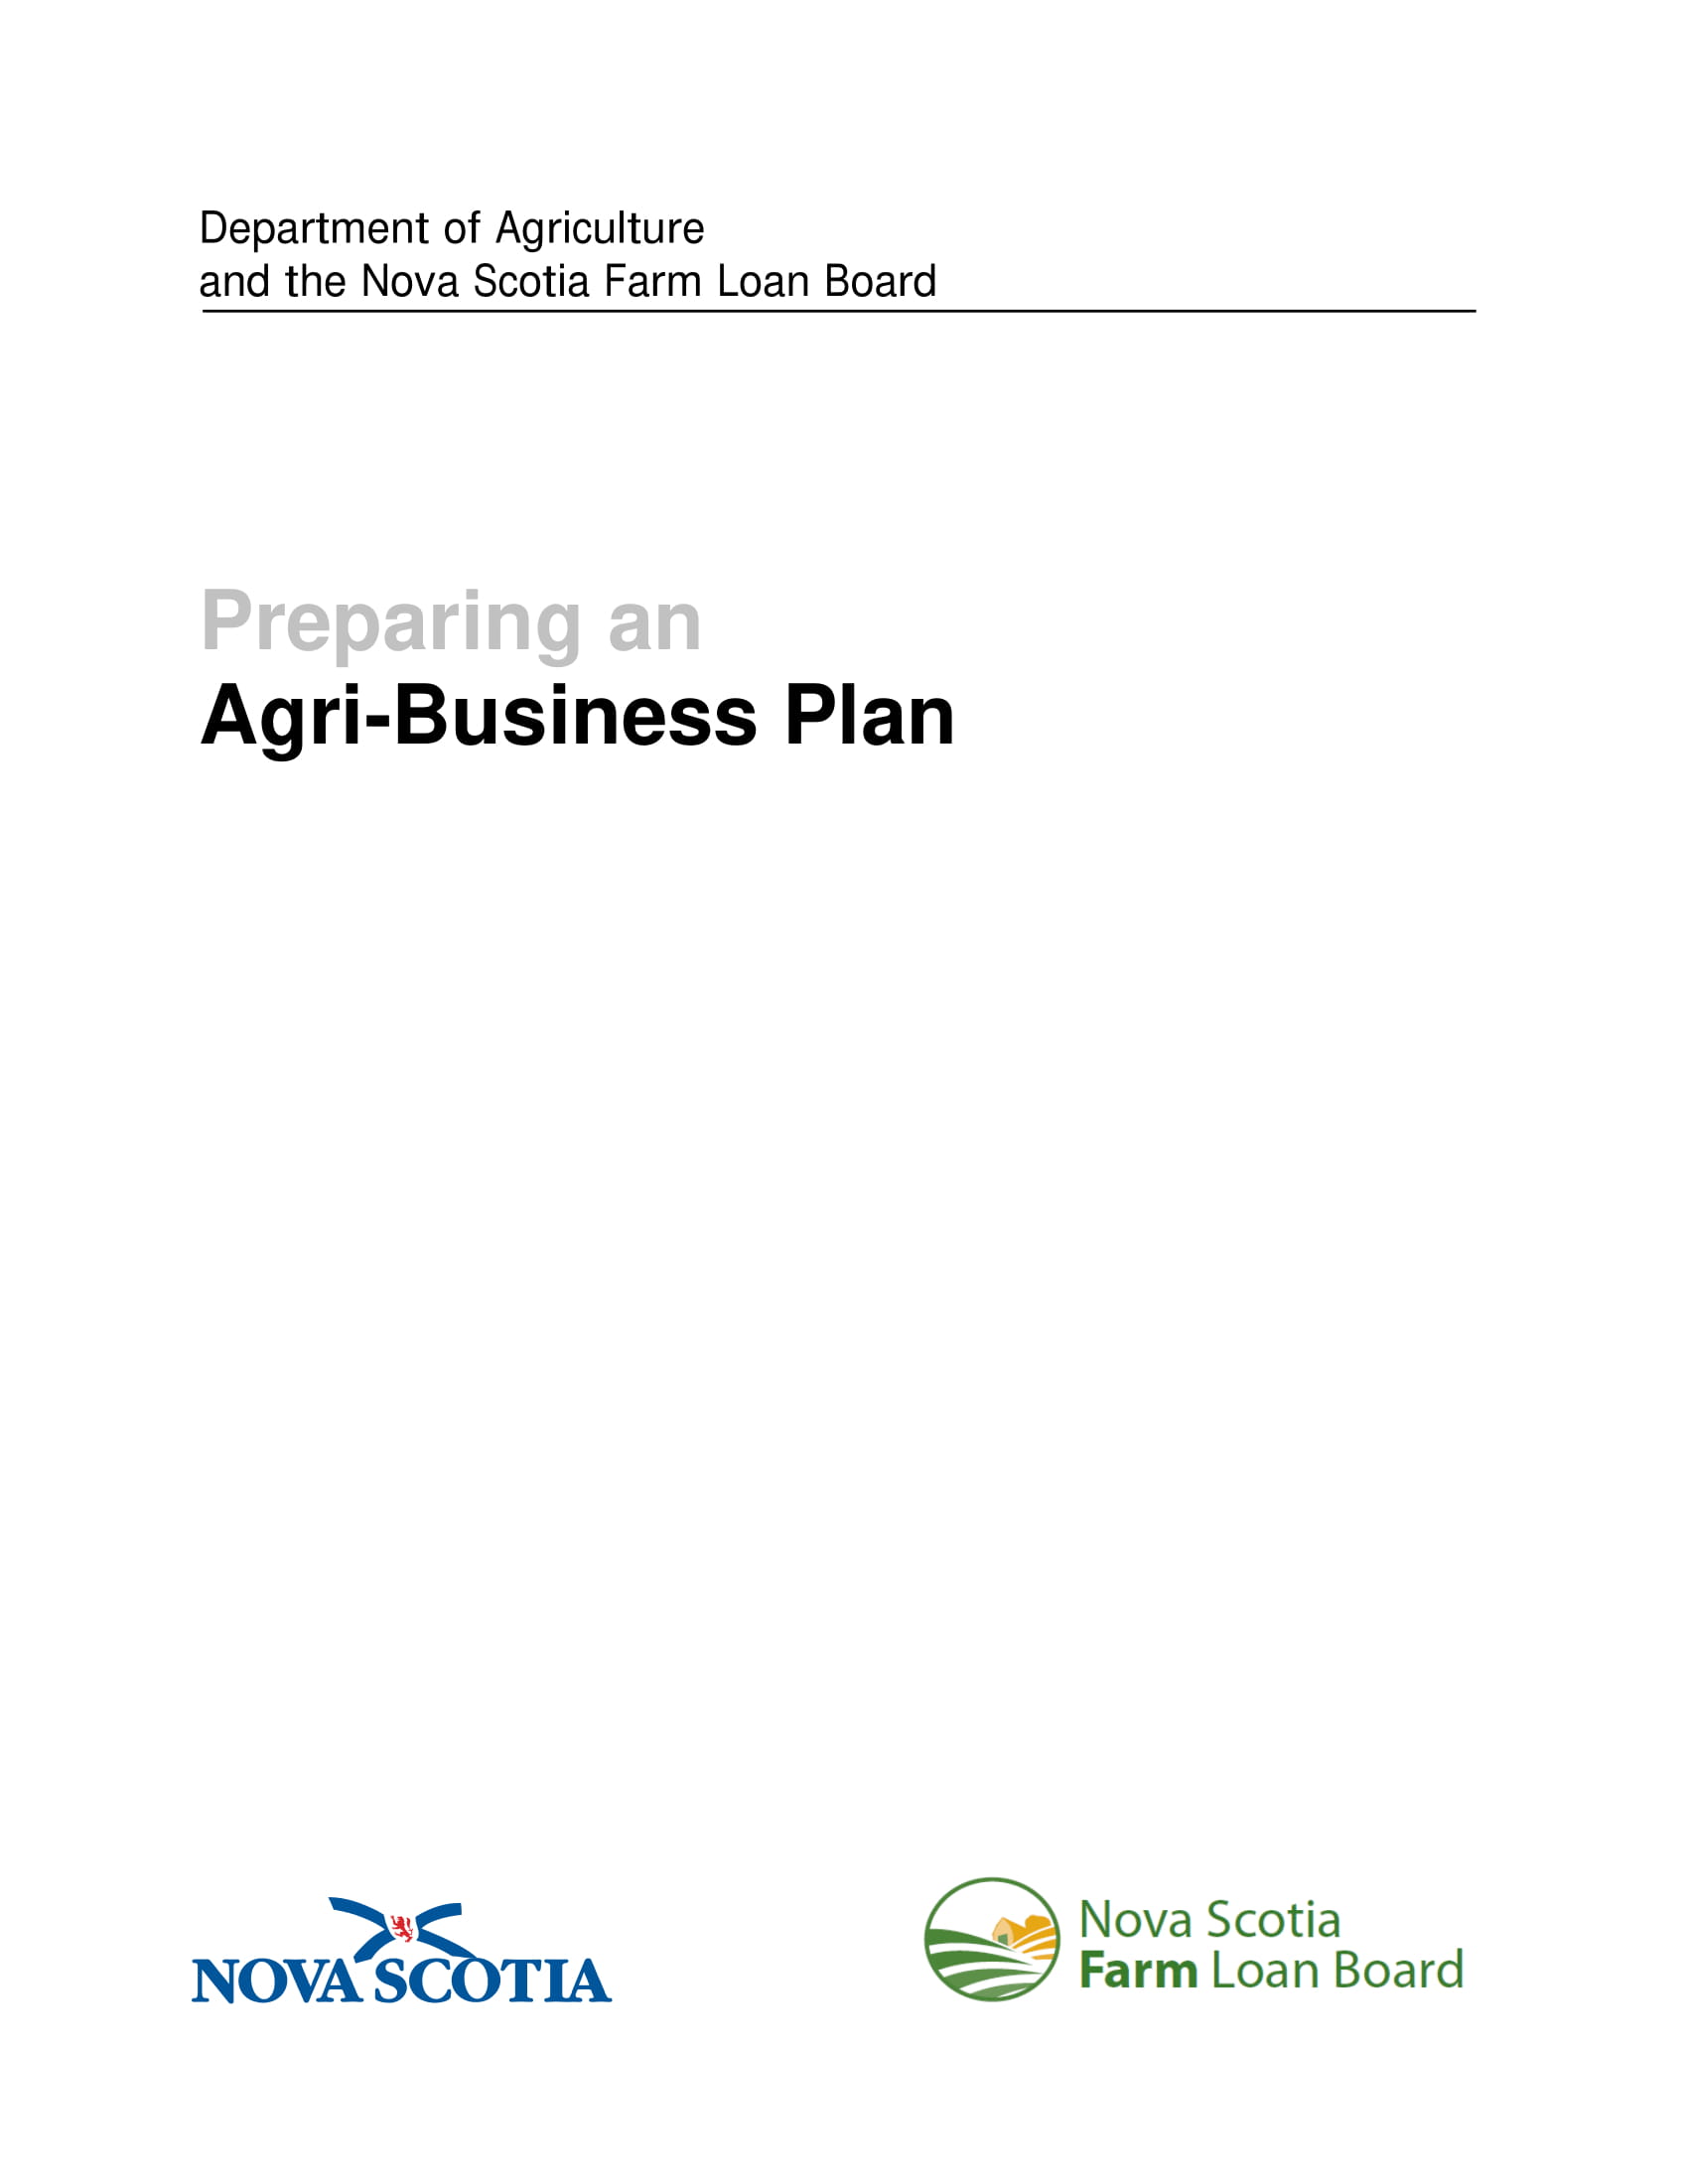 business plan about farming